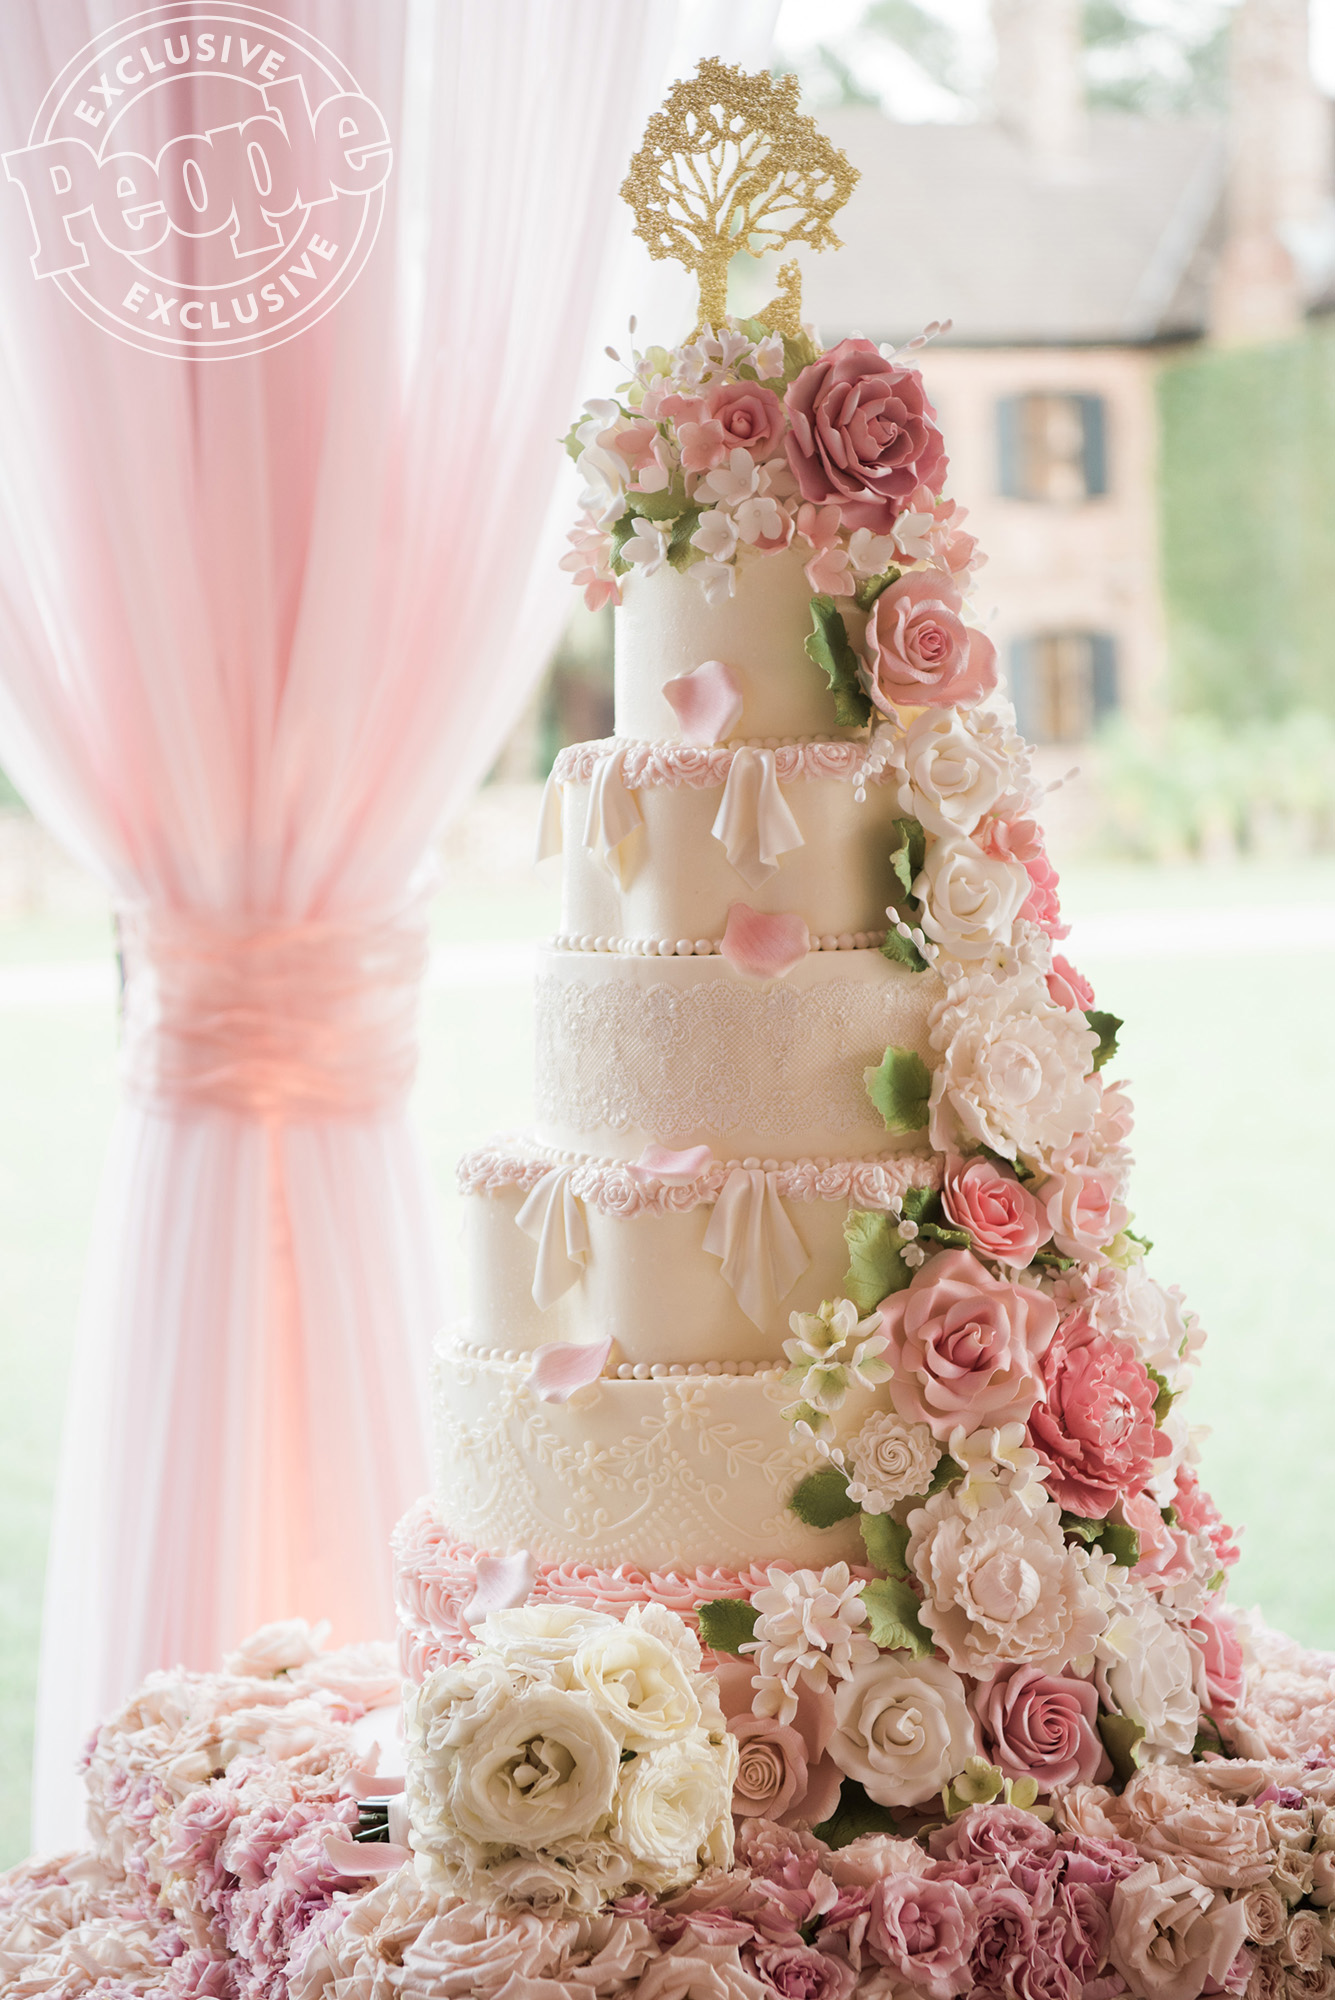 Tara Lipinski's Wedding Cake Photos and Details | PEOPLE.com